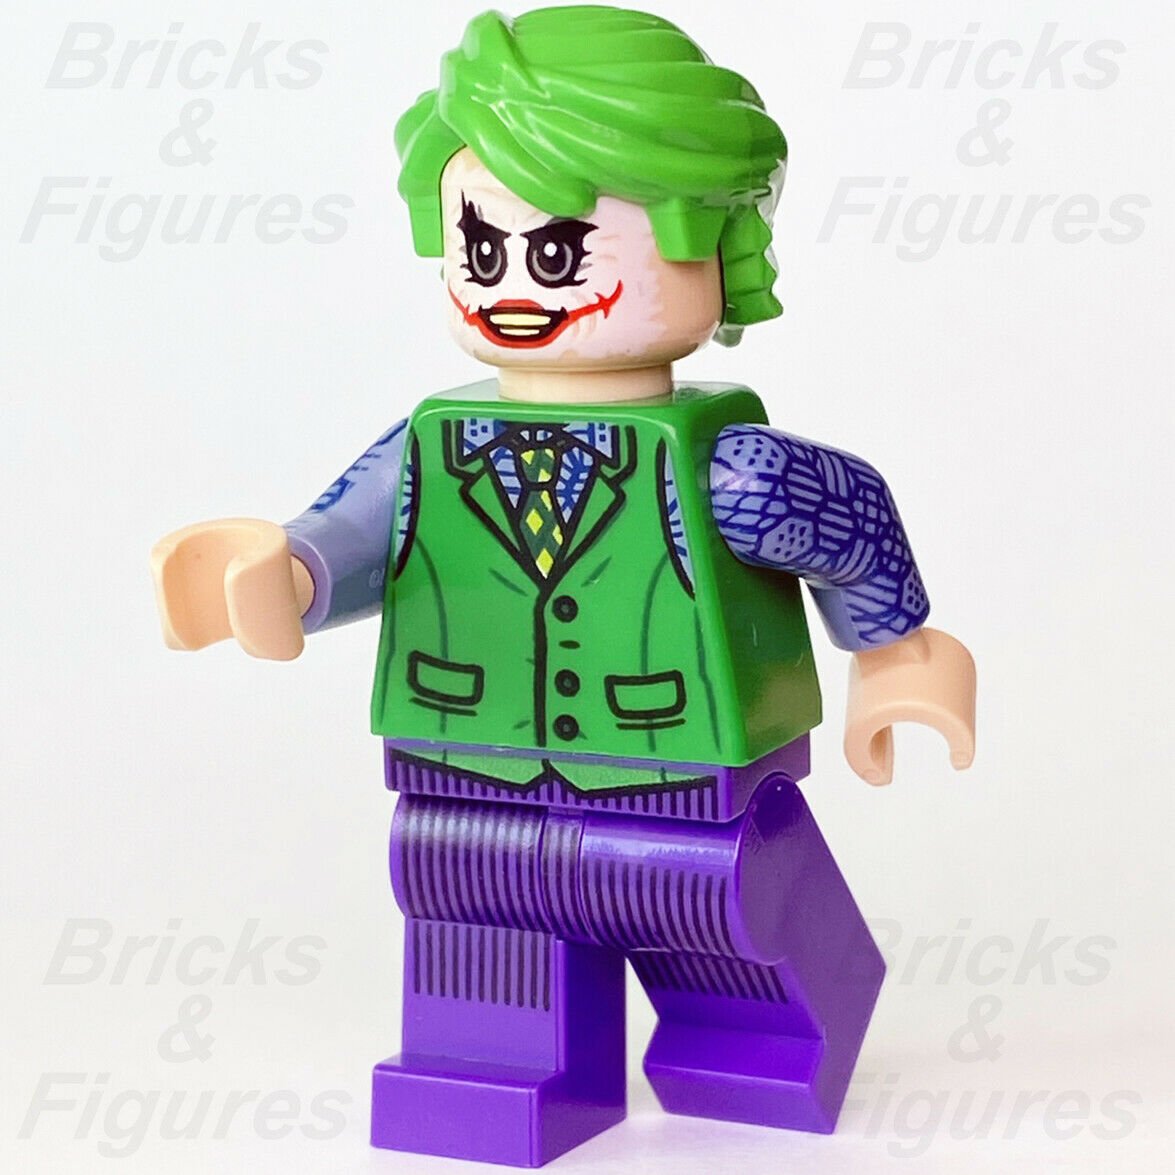 DC Super Heroes LEGO The Joker - The Dark Knight Trilogy Minifigure 76240 sh792 - Bricks & Figures